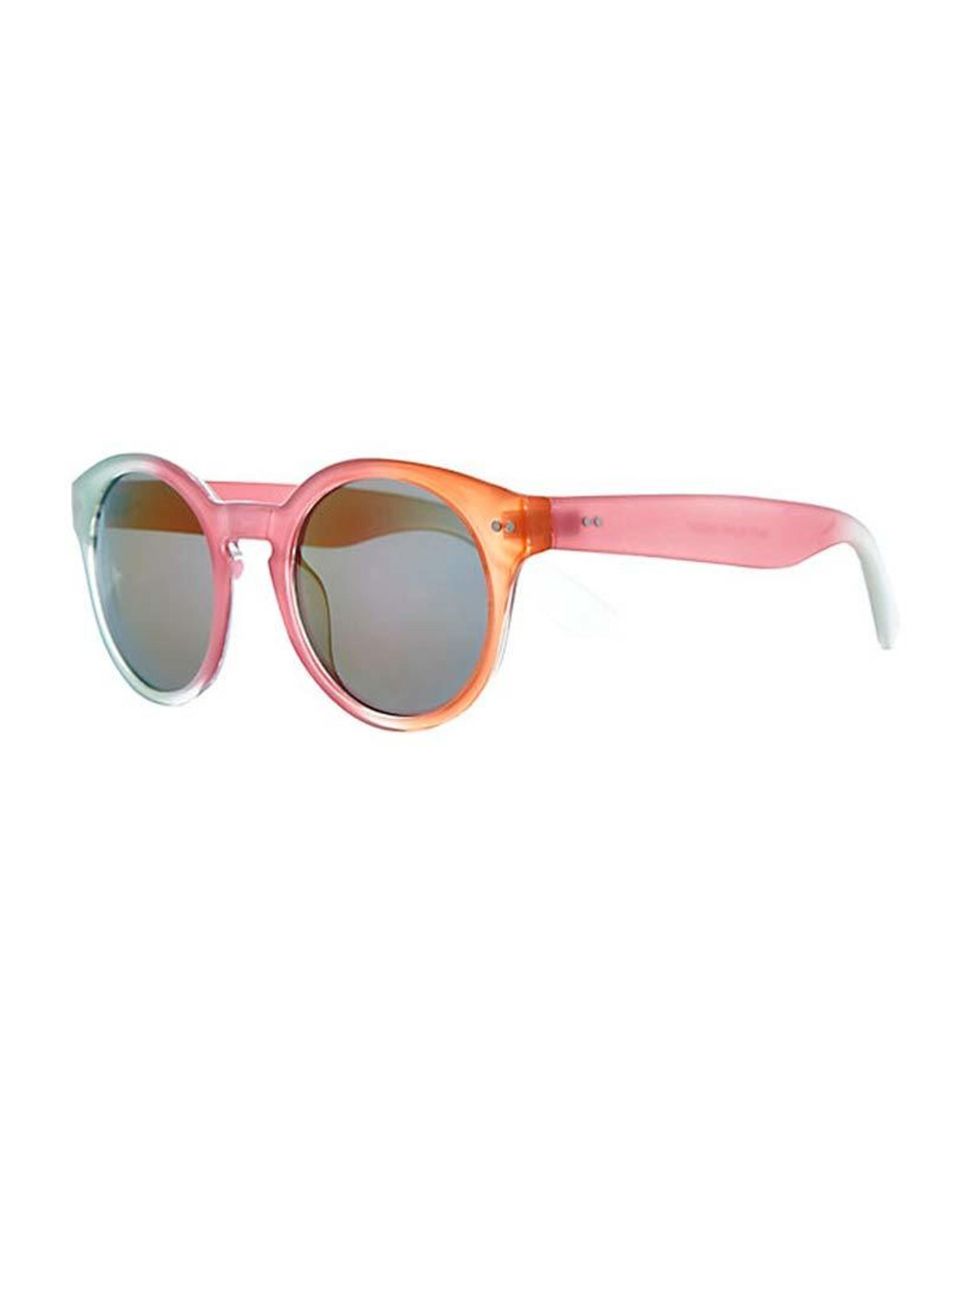 <p>Why have one colour when you can have 3..?</p><p>Tonal pink orange sunglasses £10 by<a href="http://www.riverisland.com/women/sunglasses/retro-sunglasses/Pink-colour-block-round-retro-sunglasses-648003"> River Island </a></p>